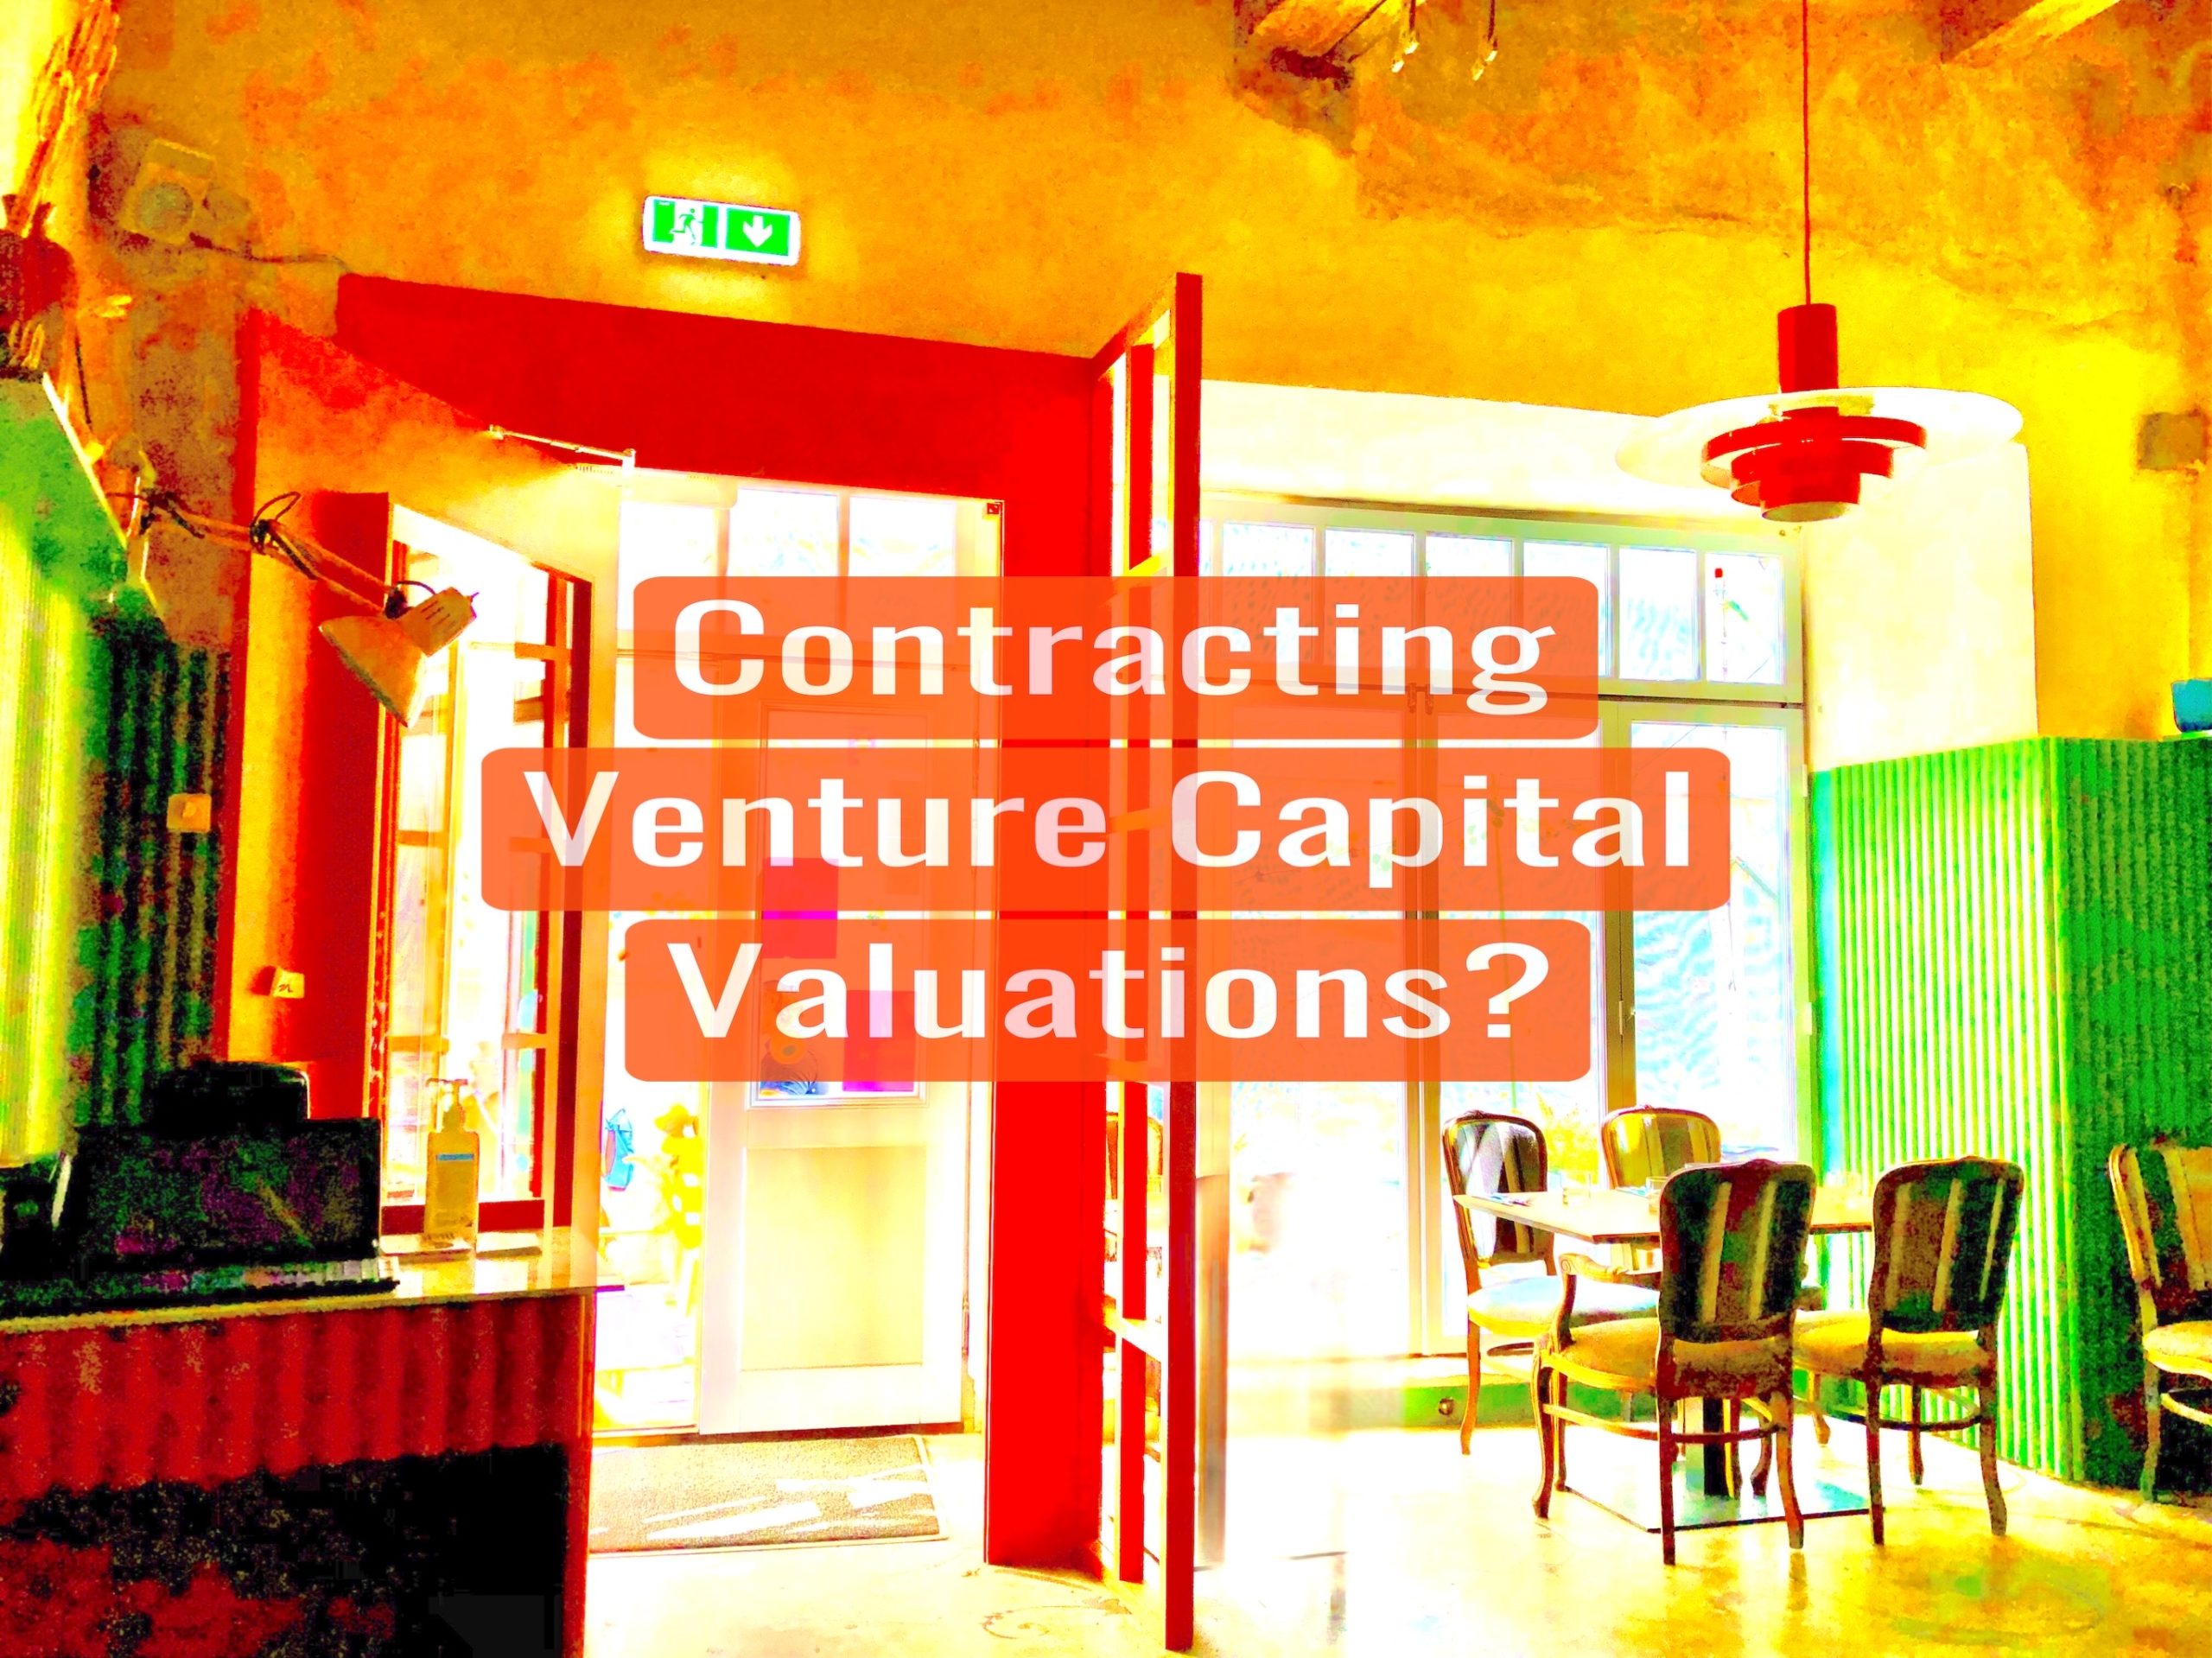 Contracting Venture Capital Valuations?